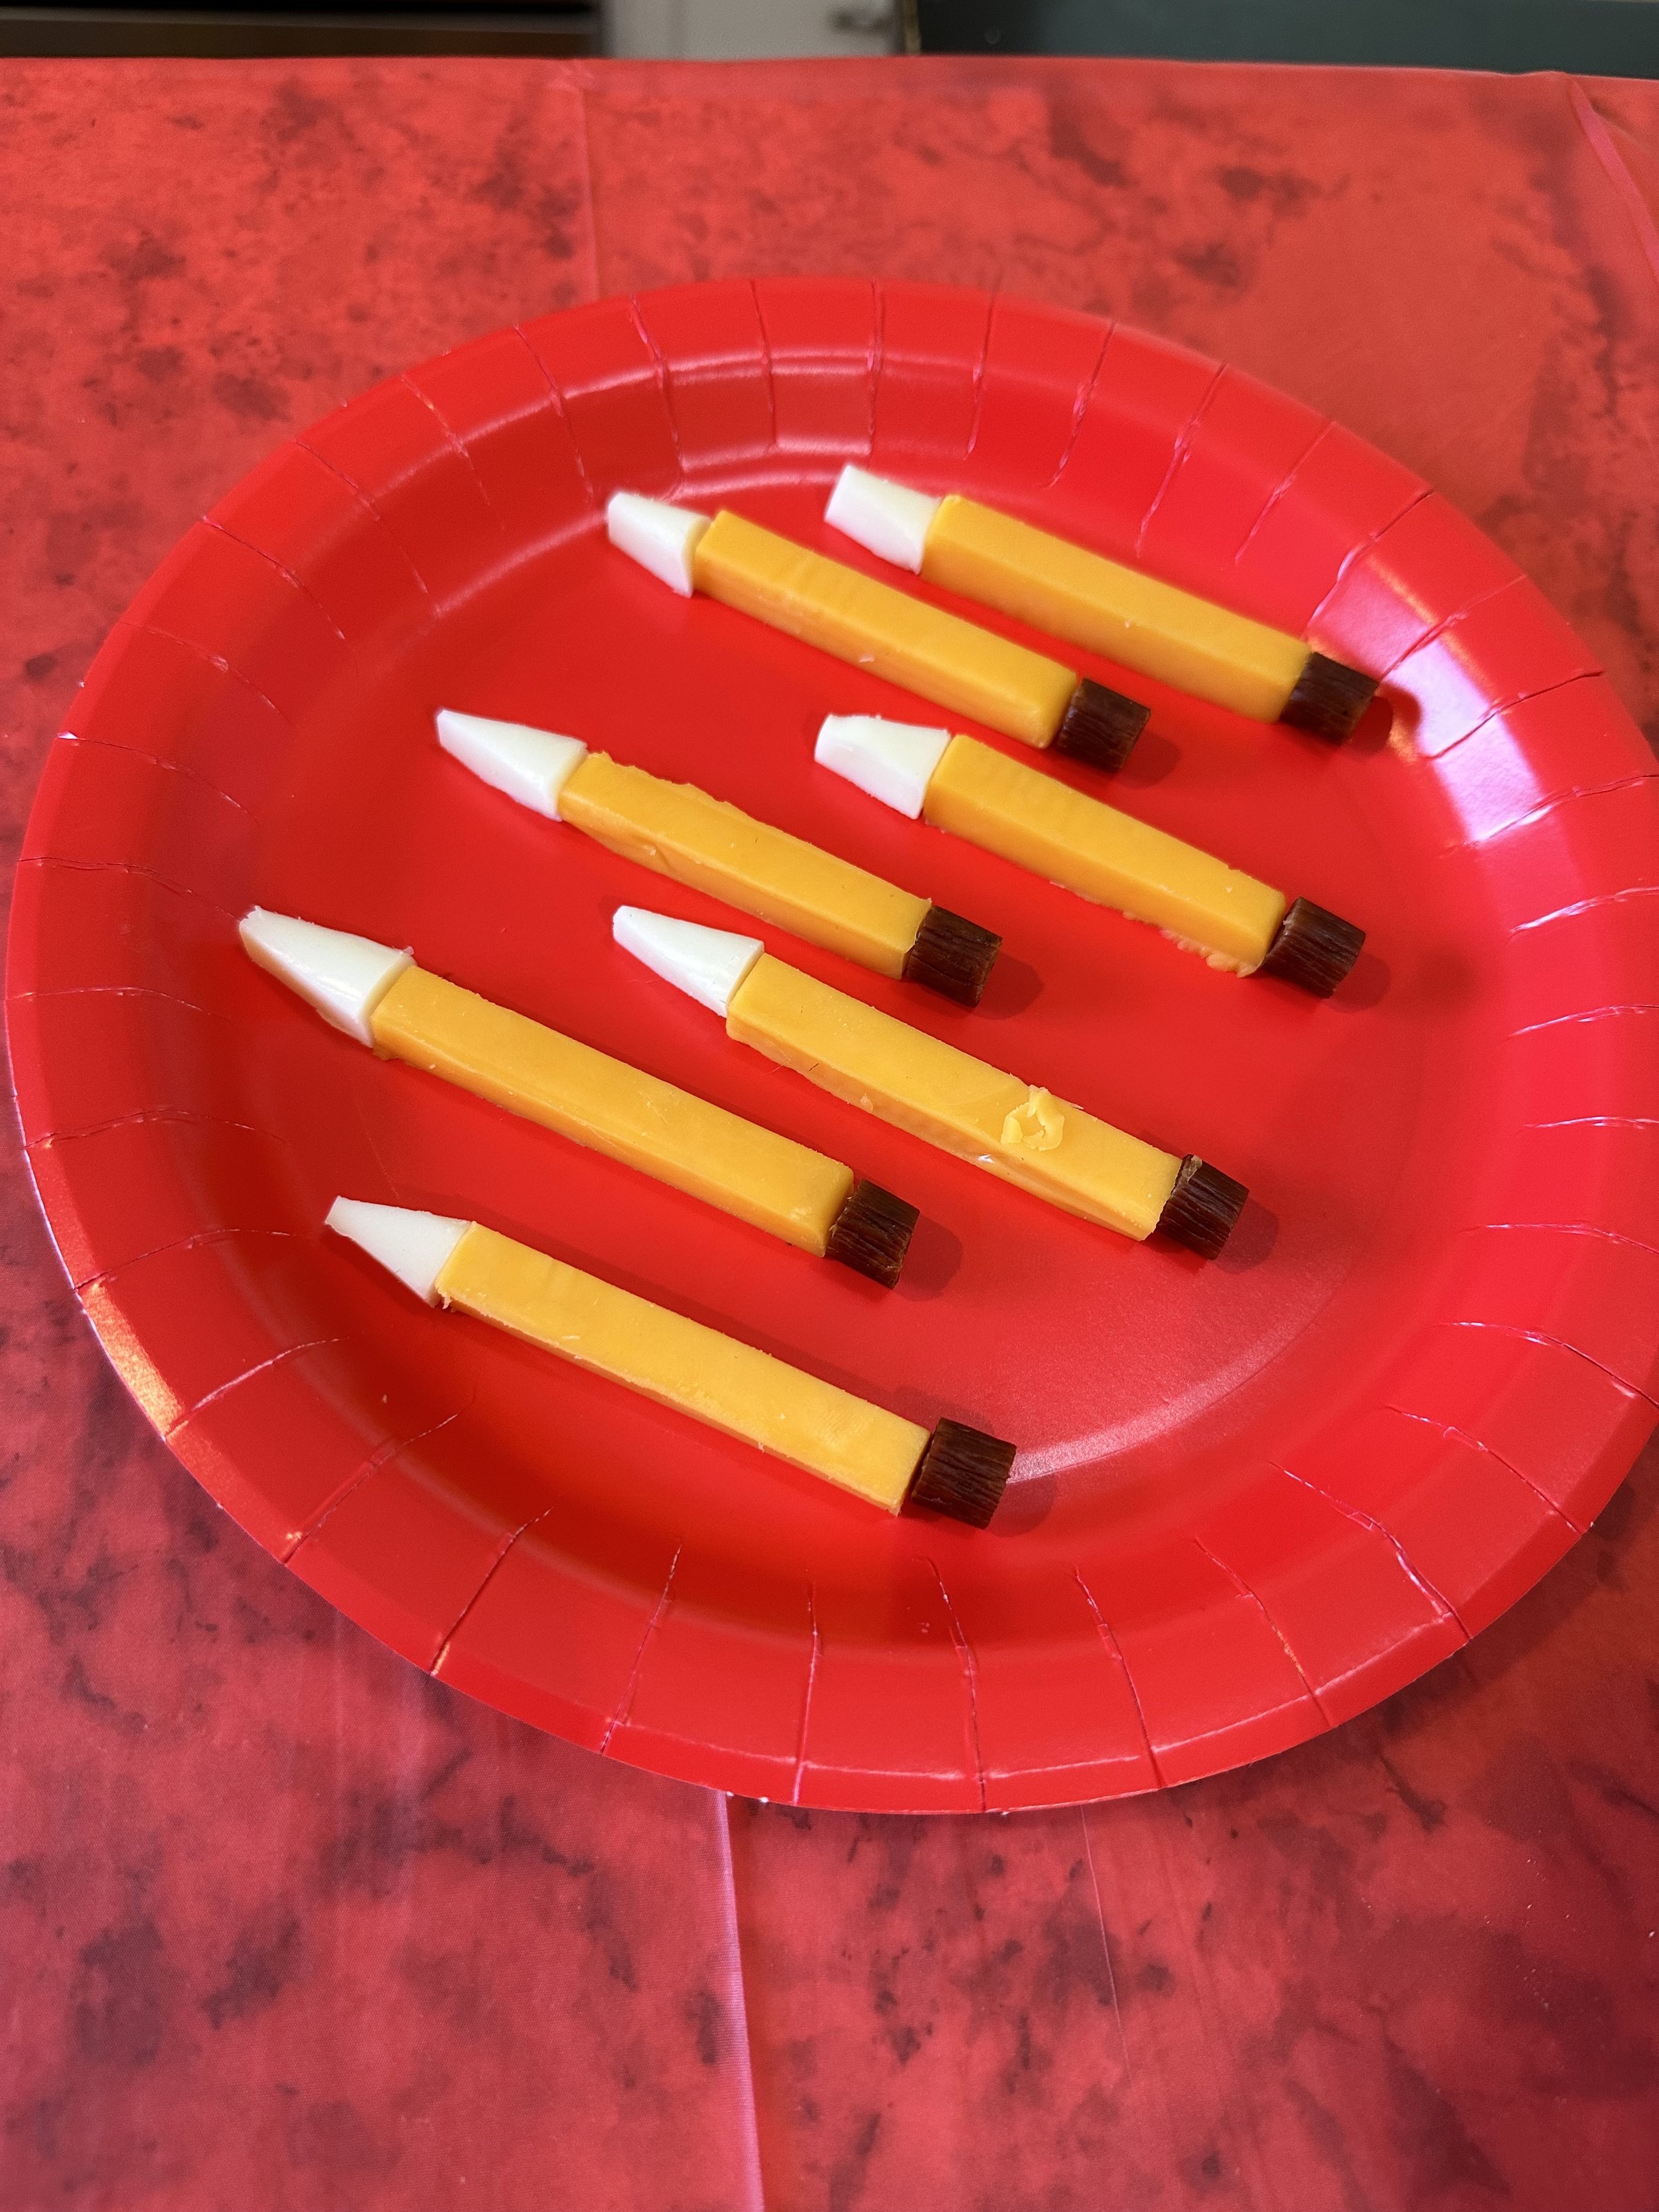 cheese and slim jim pencils.jpg